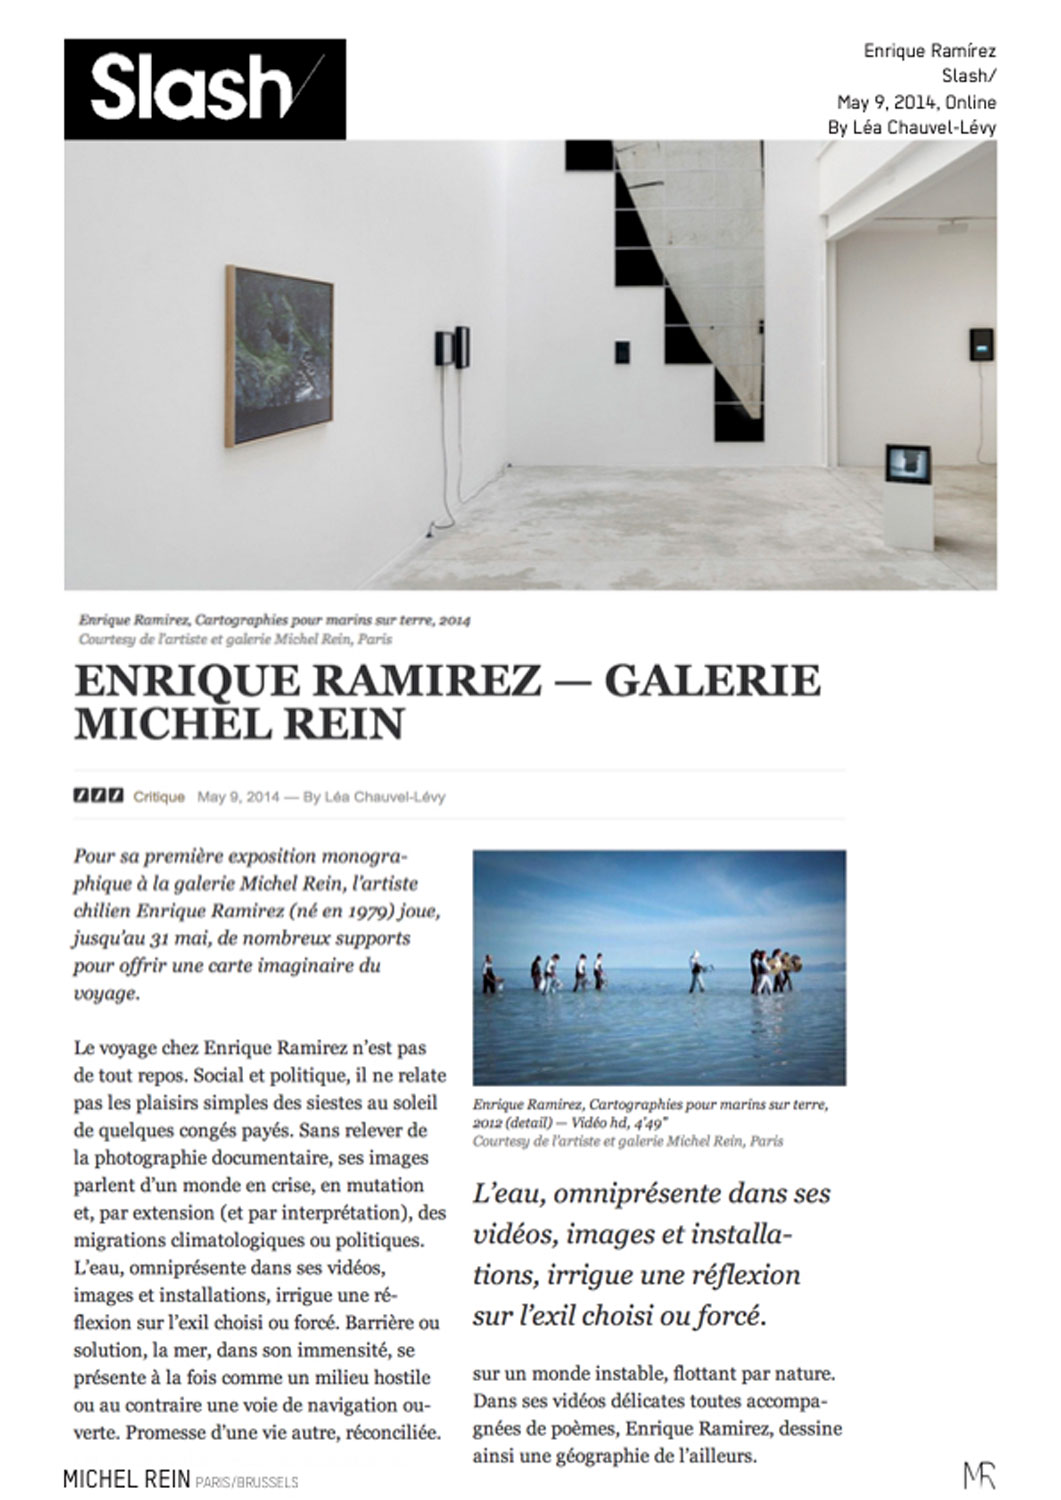 Enrique Ramrez - Galerie Michel Rein - Slash/